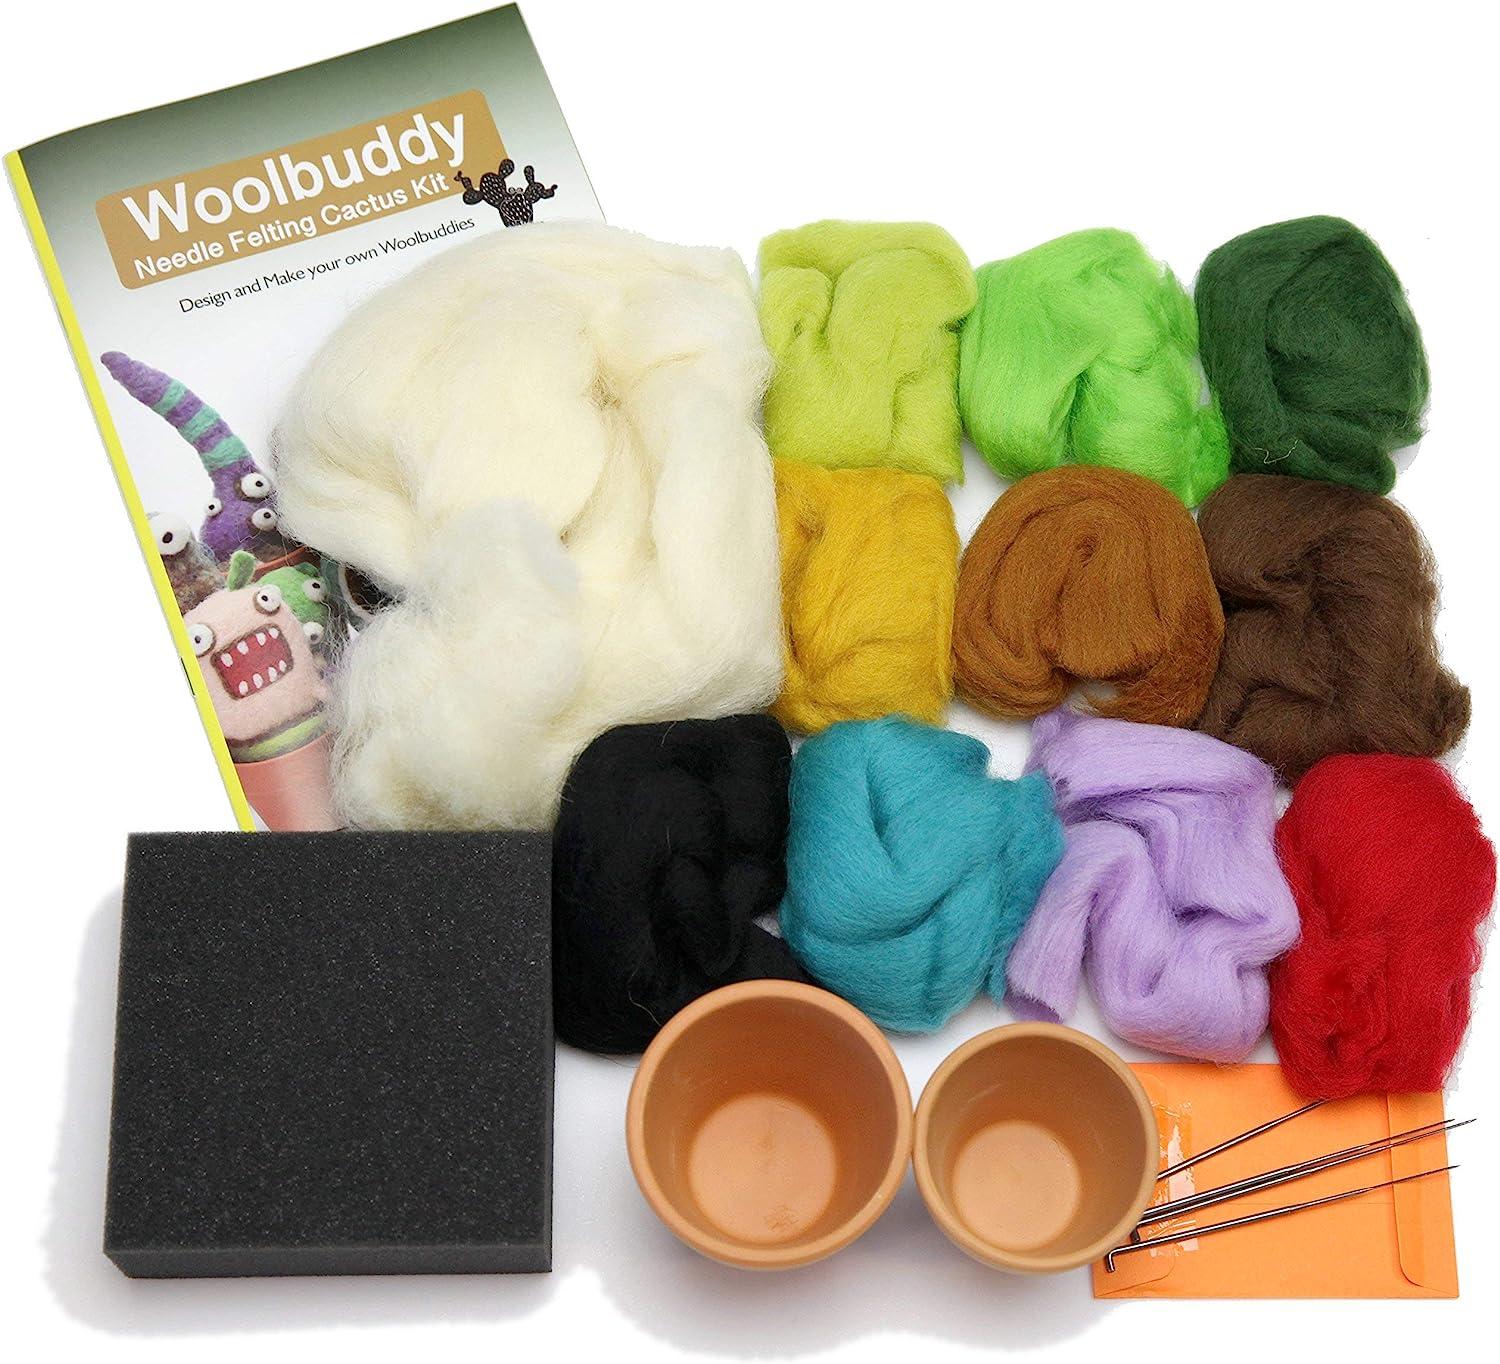 Woolbuddy Needle Felting Kit, Beginner Felting Kit, Felting Tools Included, 40 Colored Felting Wool, Mini Needle Felting Pad, 4 Needle Felting